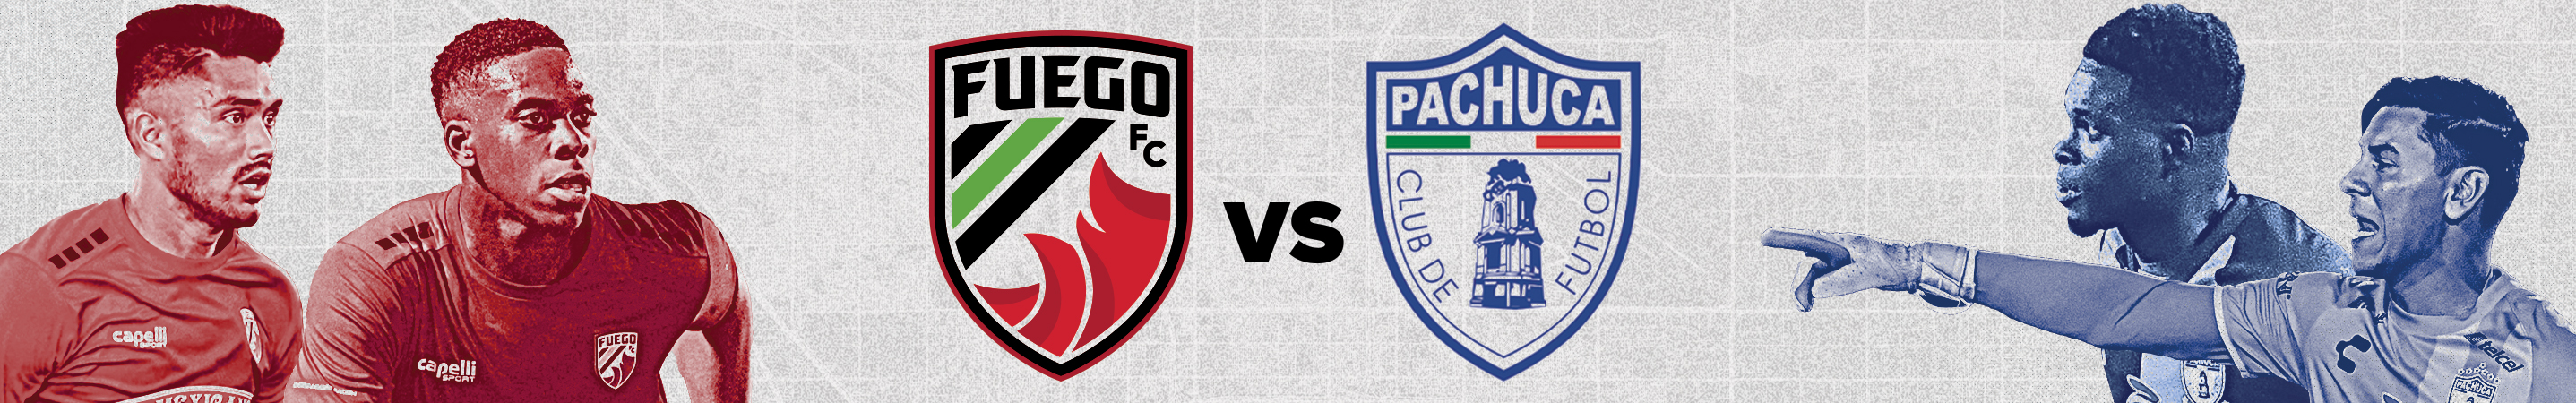 Energy FC to host Liga MX club Pachuca in friendly